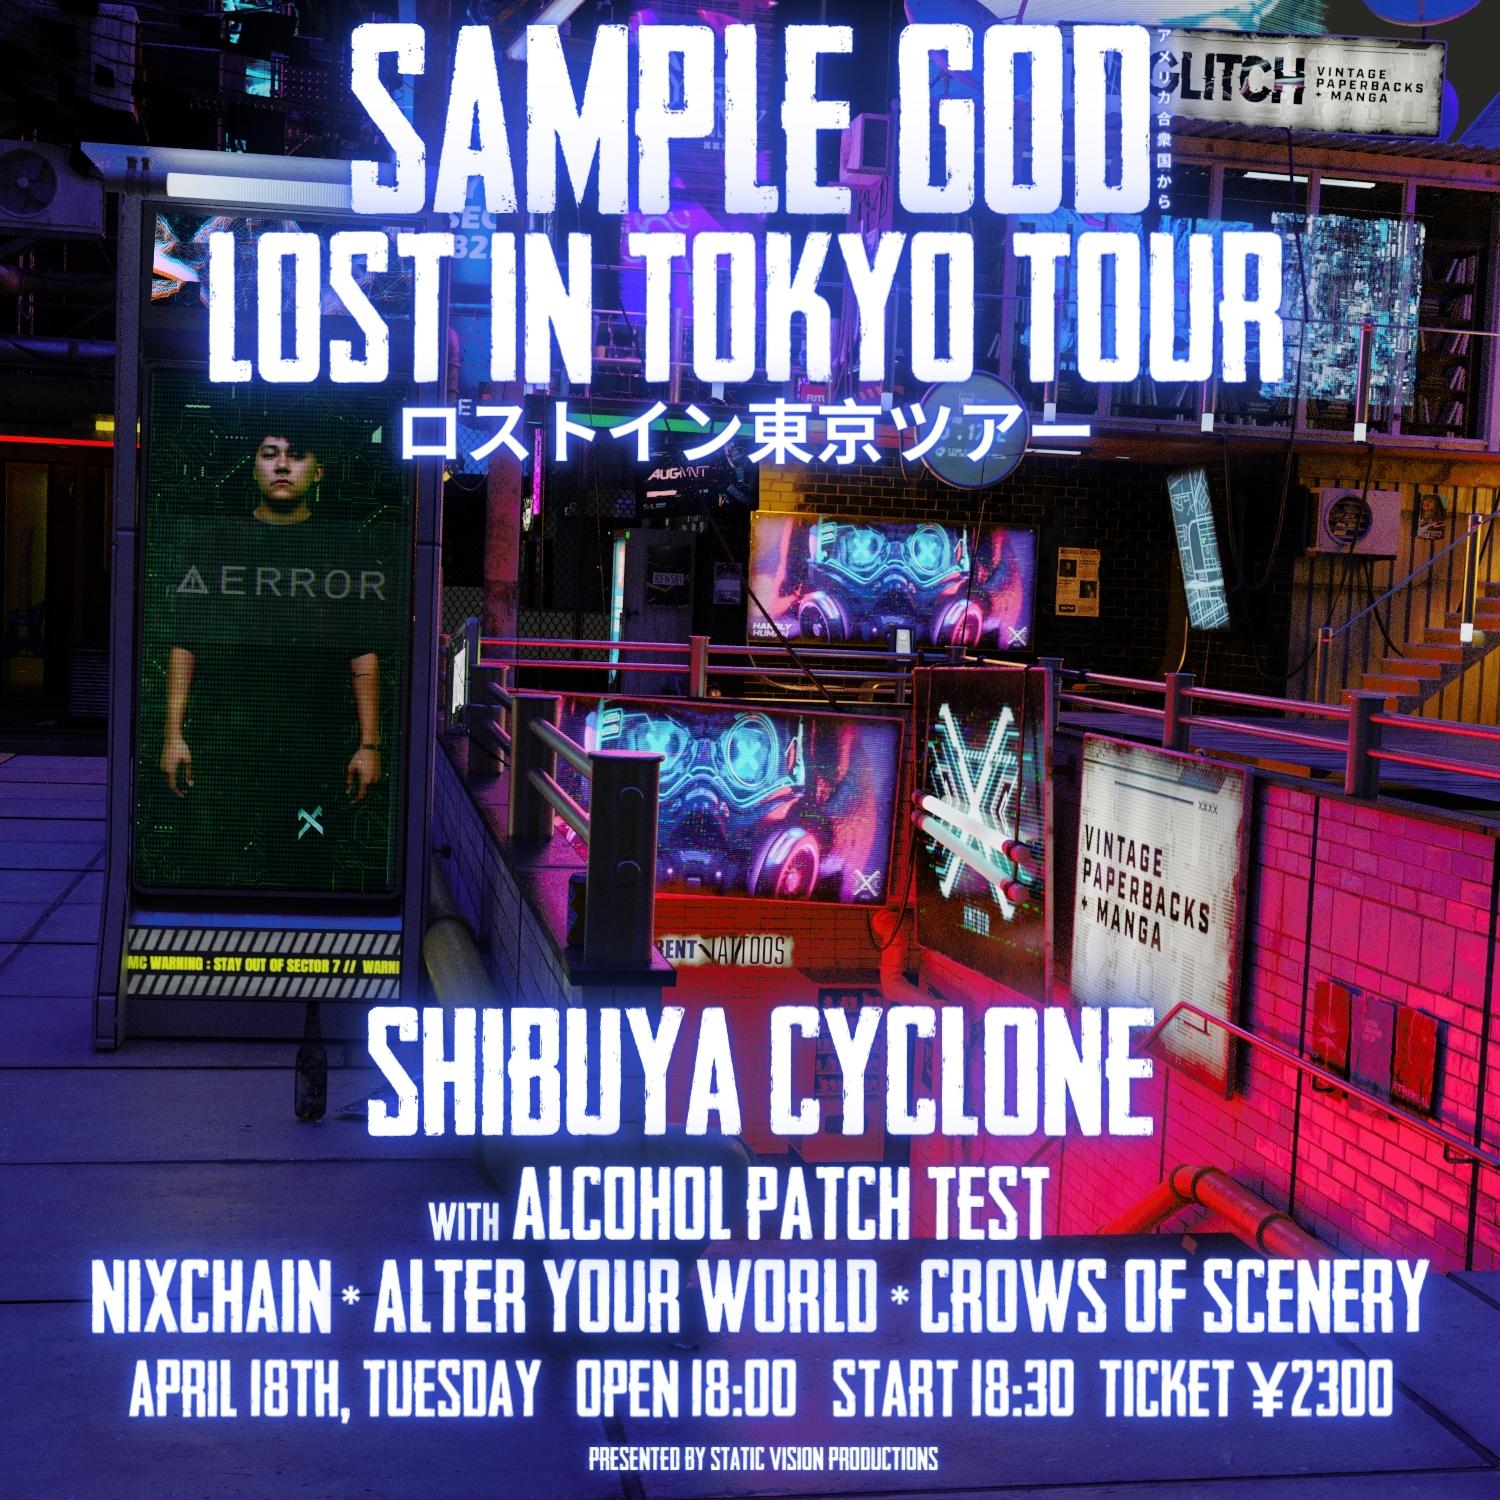 Sample God Lost in Tokyo TOUR